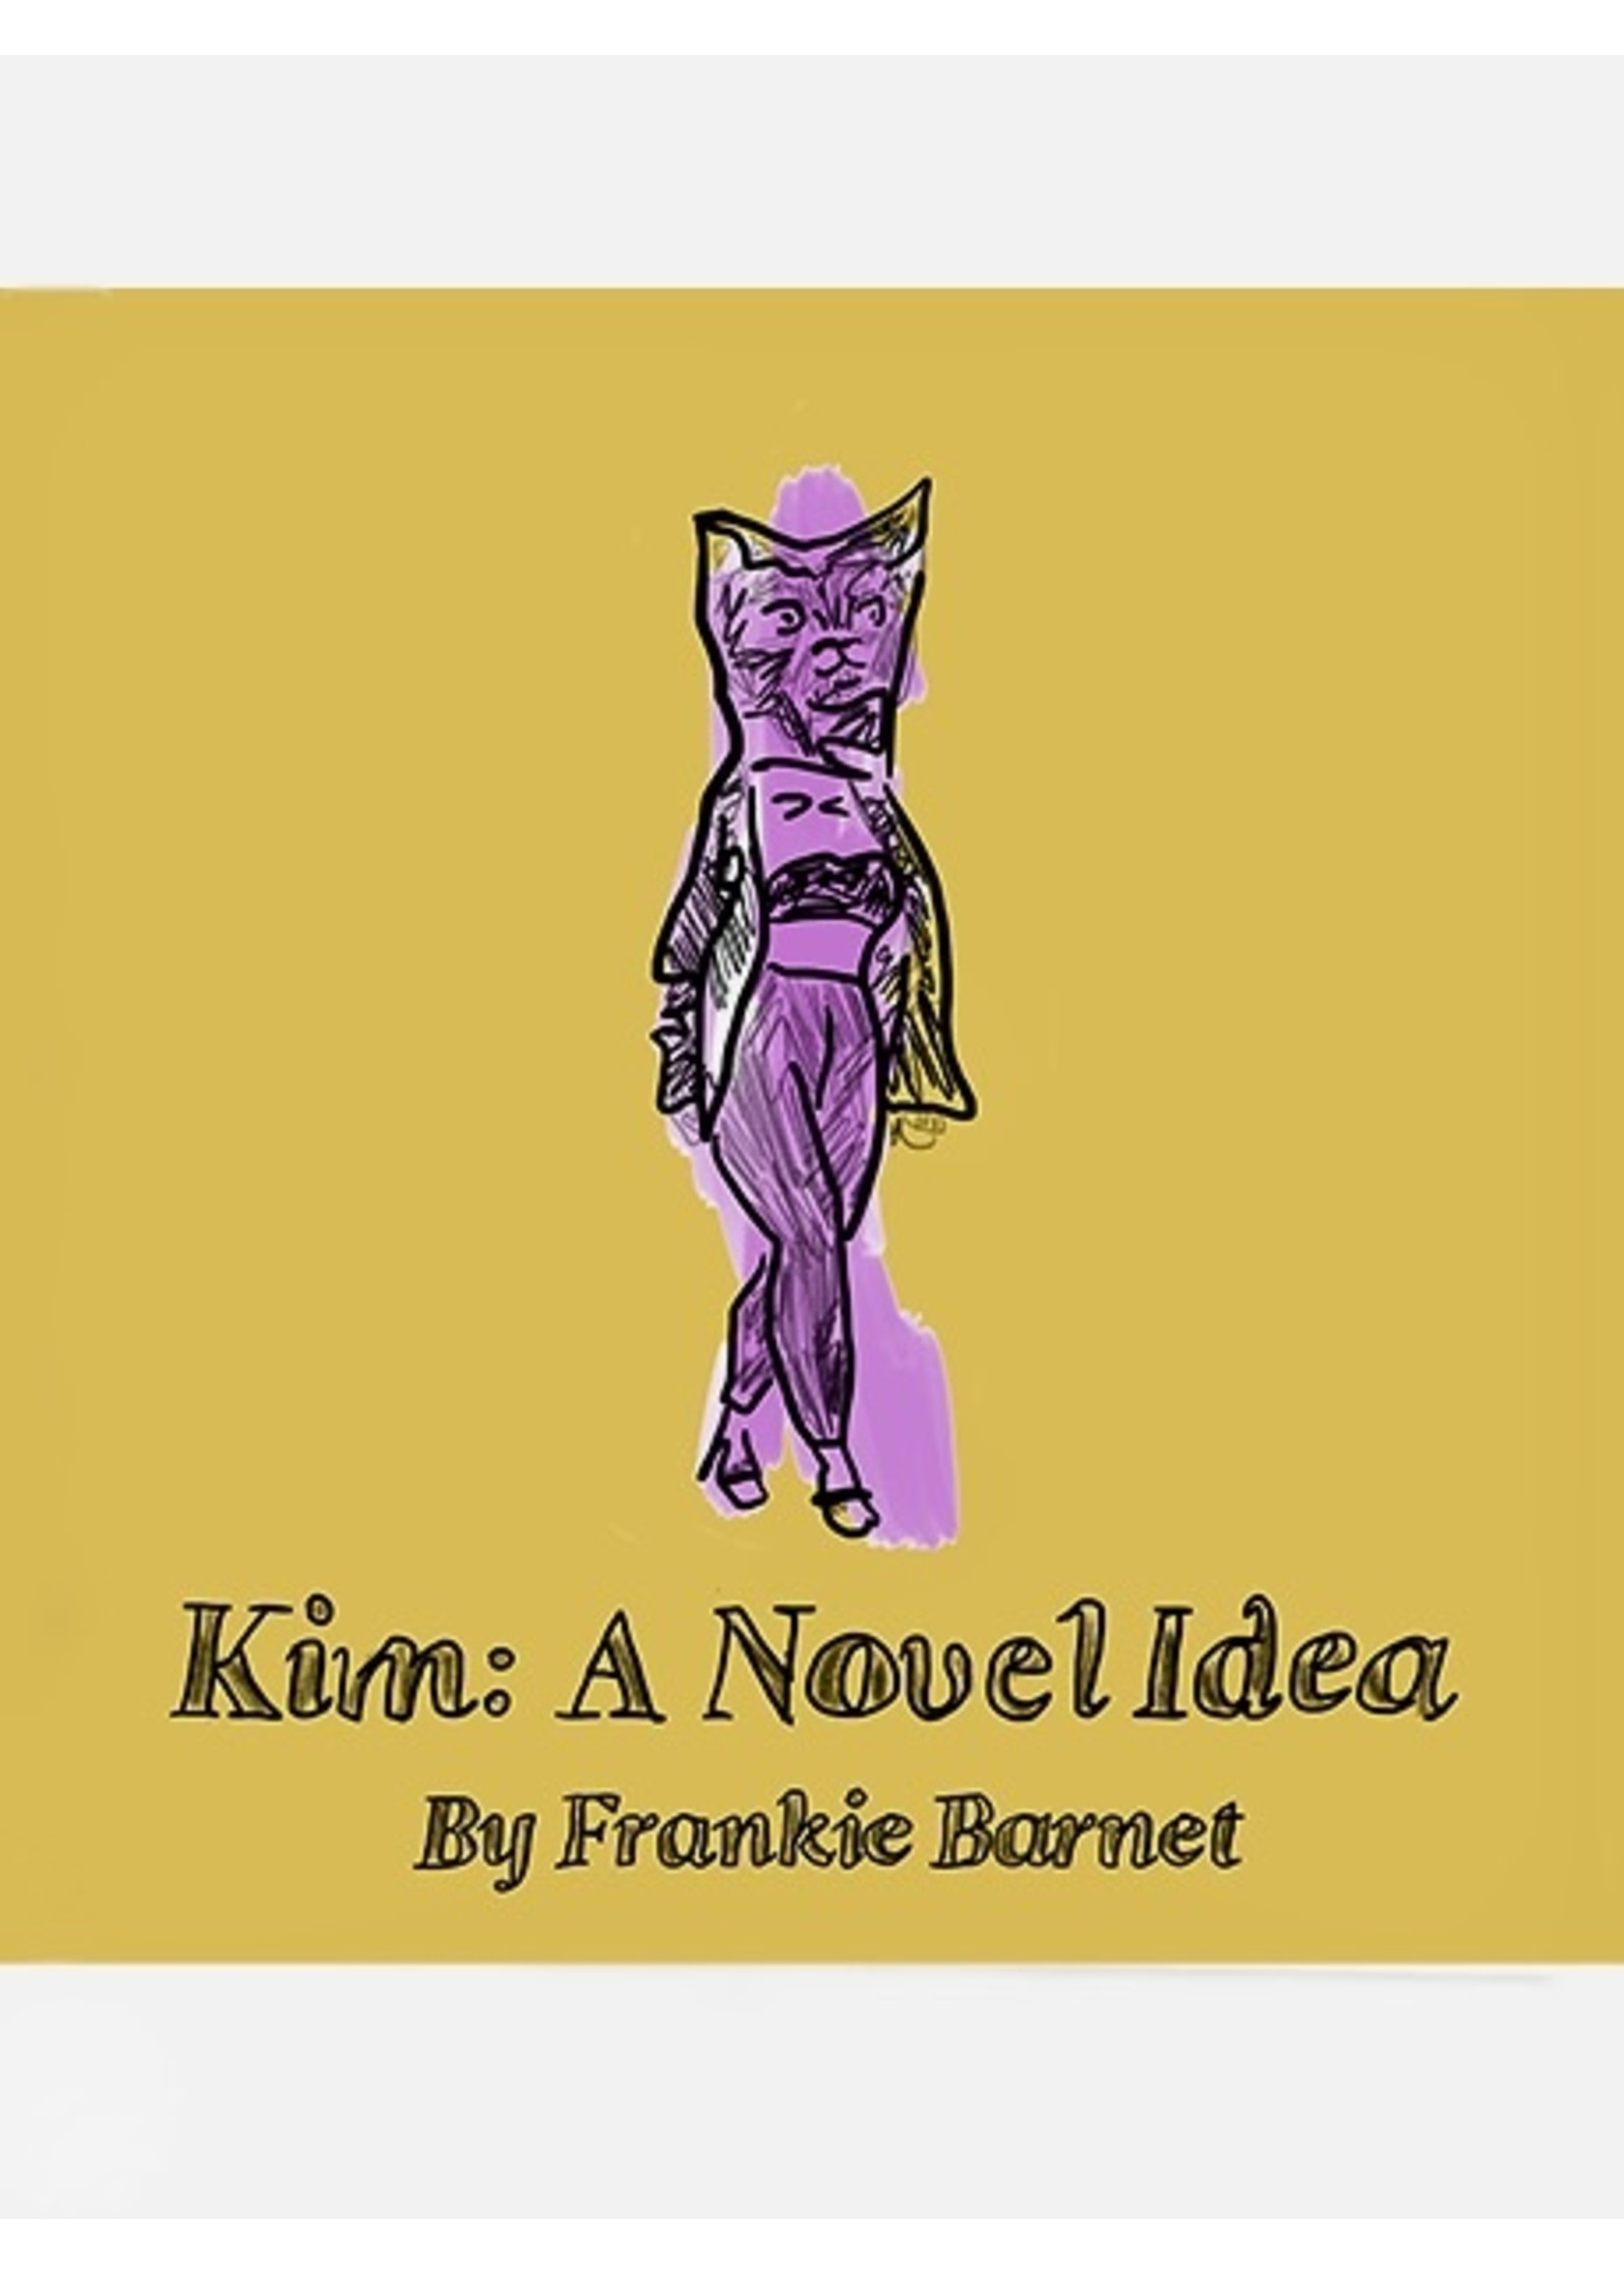 Metatron Press "Kim: A Novel Idea" by Frankie Barnet